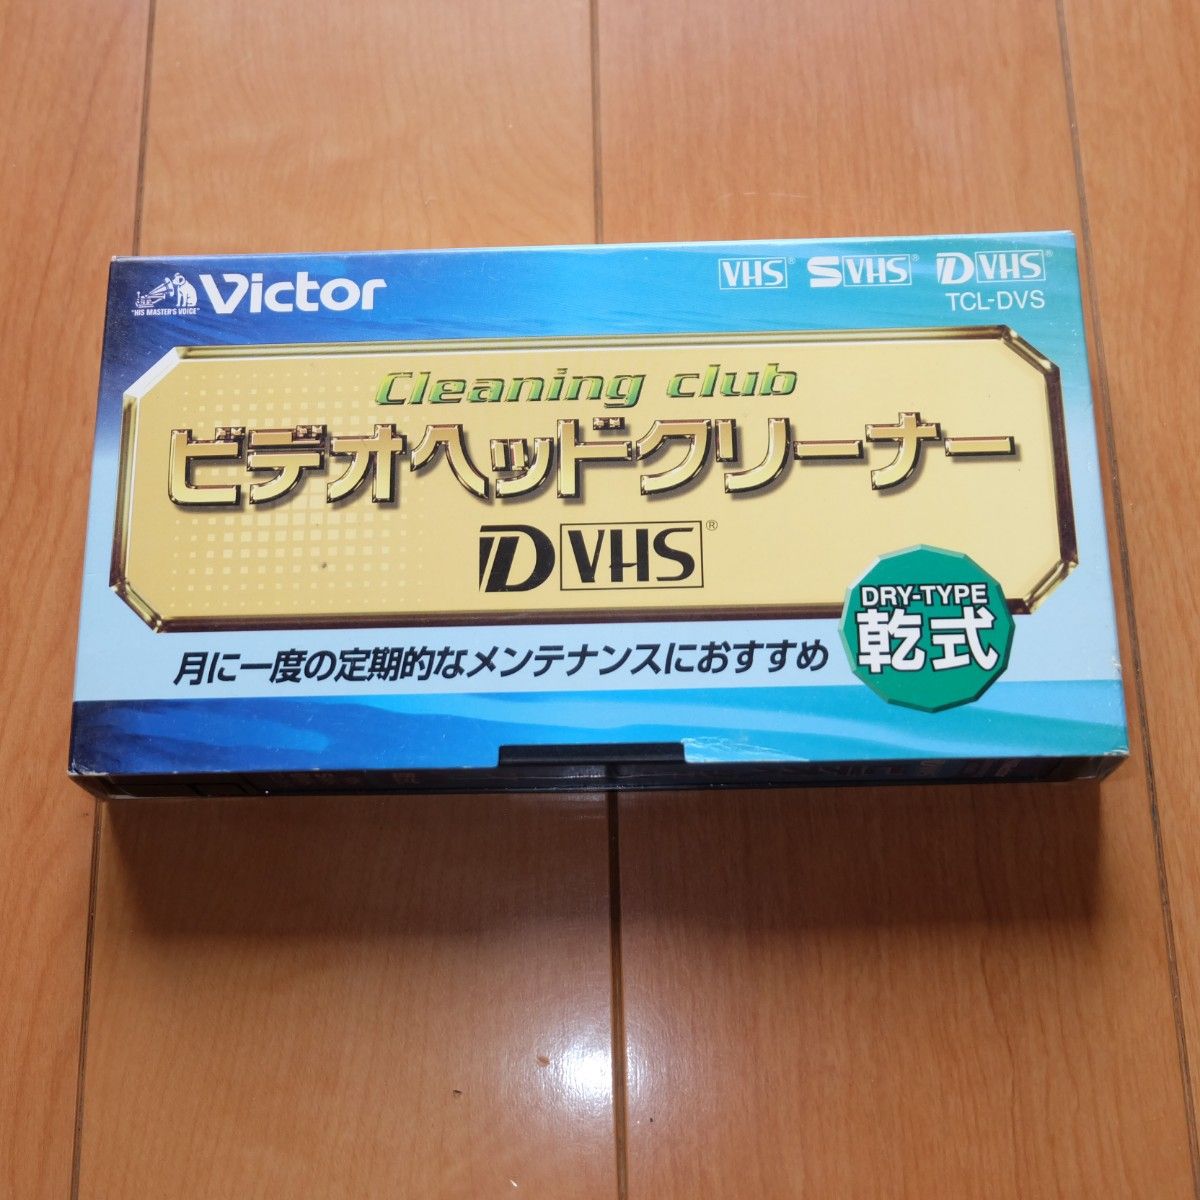 Victor ビクター DVHS VHS SVHS ビデオヘッドクリーナー 乾式 TCL-DVS テープ